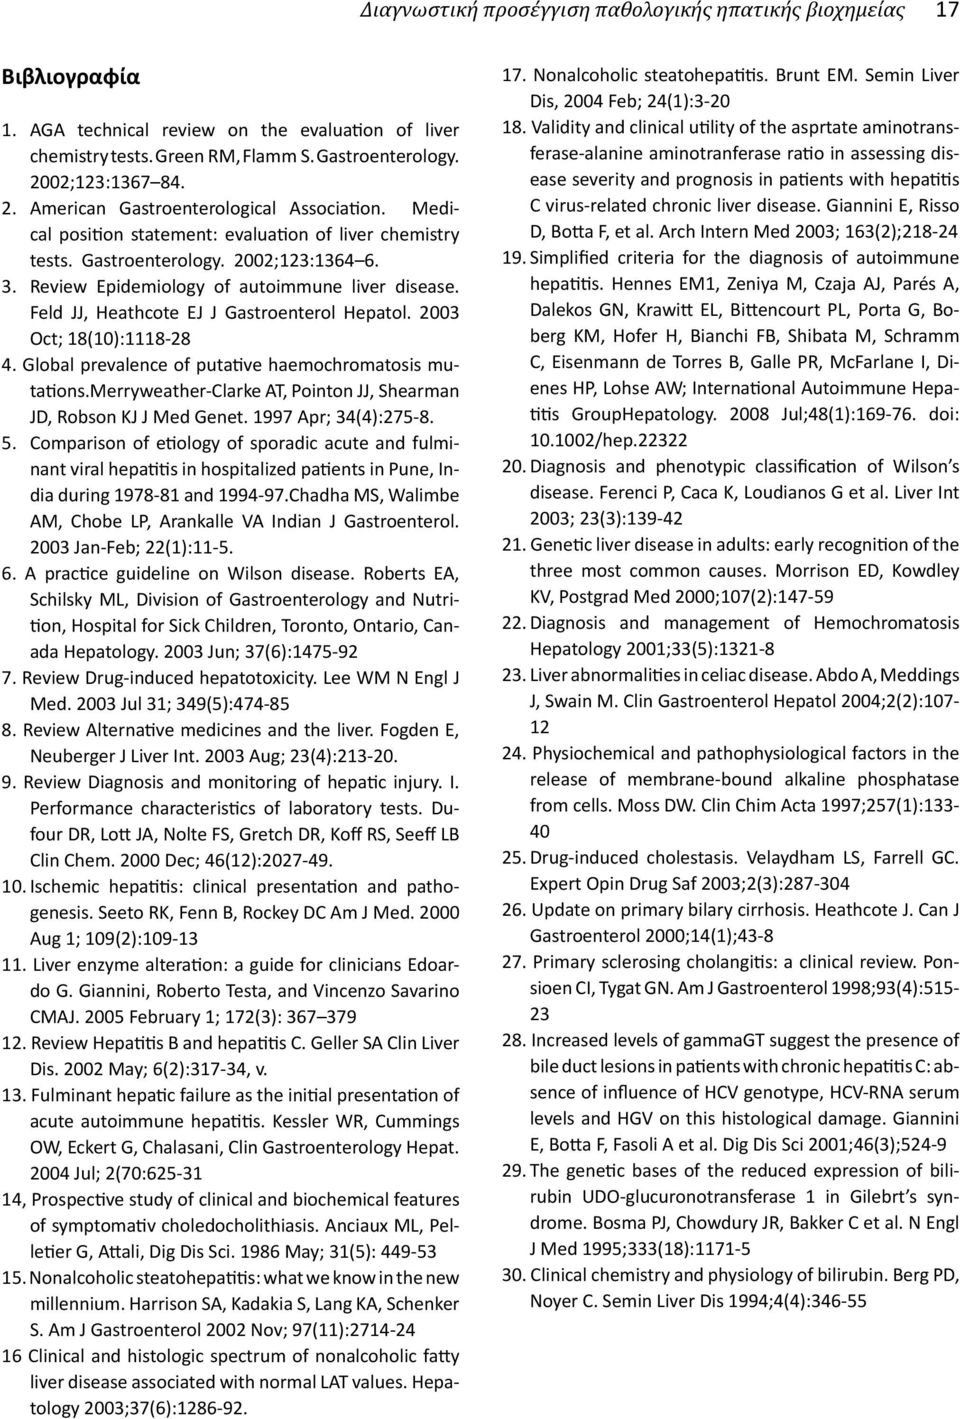 2003 Oct; 18(10):1118-28 4. Global prevalence of putative haemochromatosis mutations.merryweather-clarke AT, Pointon JJ, Shearman JD, Robson KJ J Med Genet. 1997 Apr; 34(4):275-8. 5.